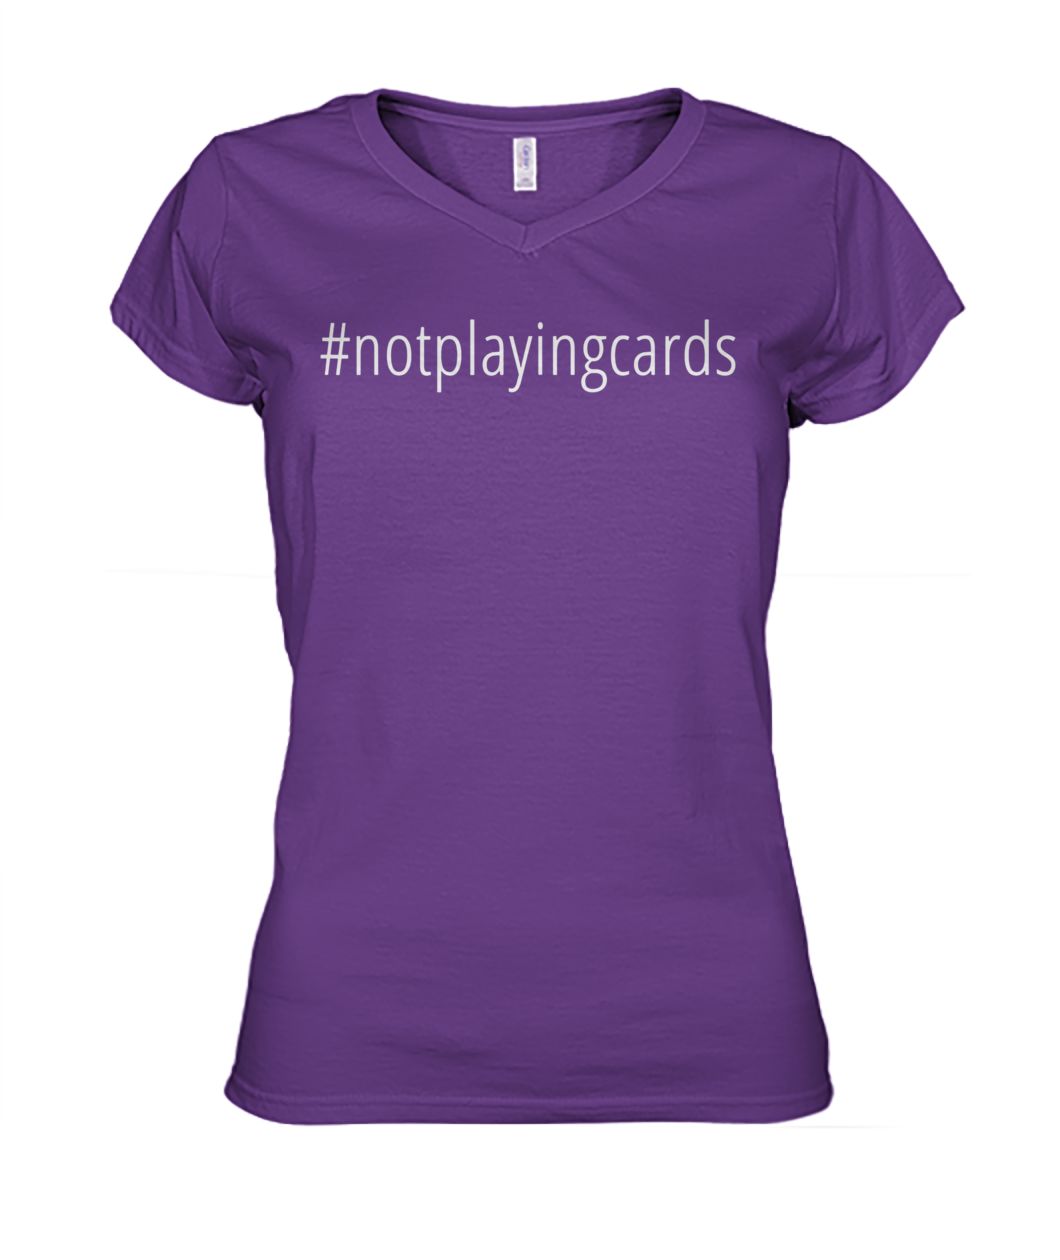 Not playing cards nurse hashtag women's v-neck